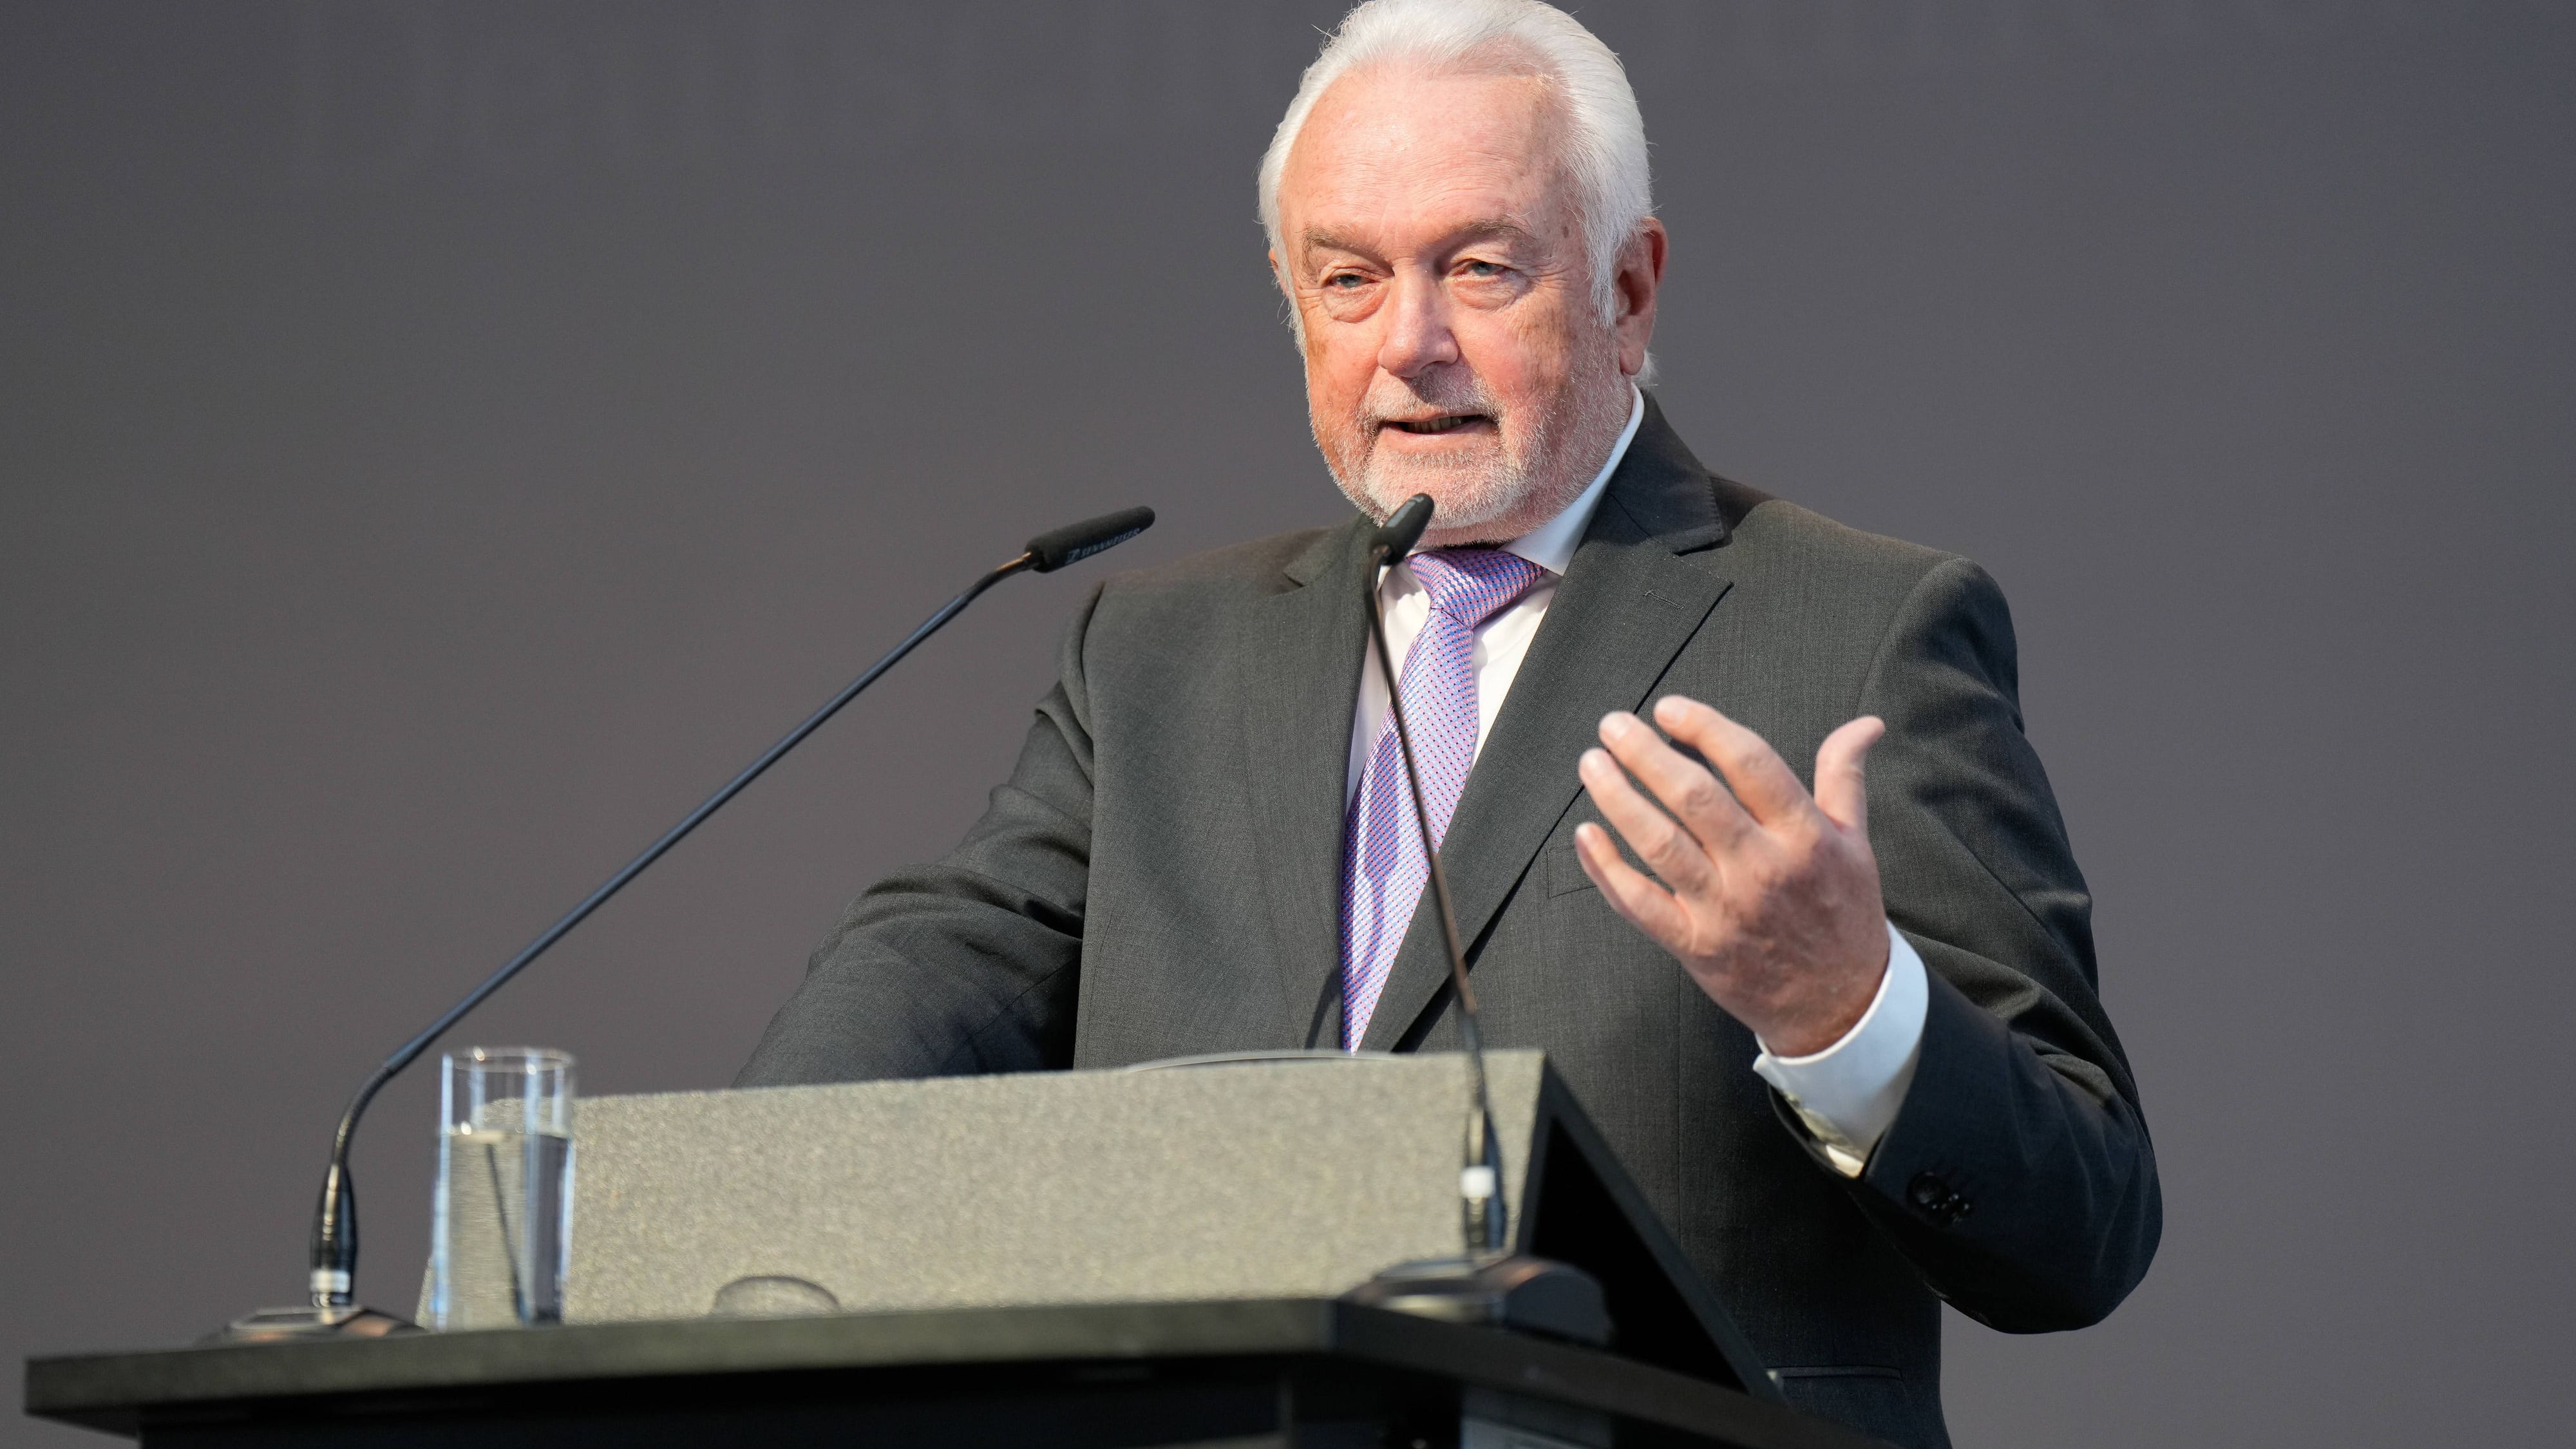 Wolfgang Kubicki bei FDP-Parteitag: “Fundamentales Problem der Koalition”